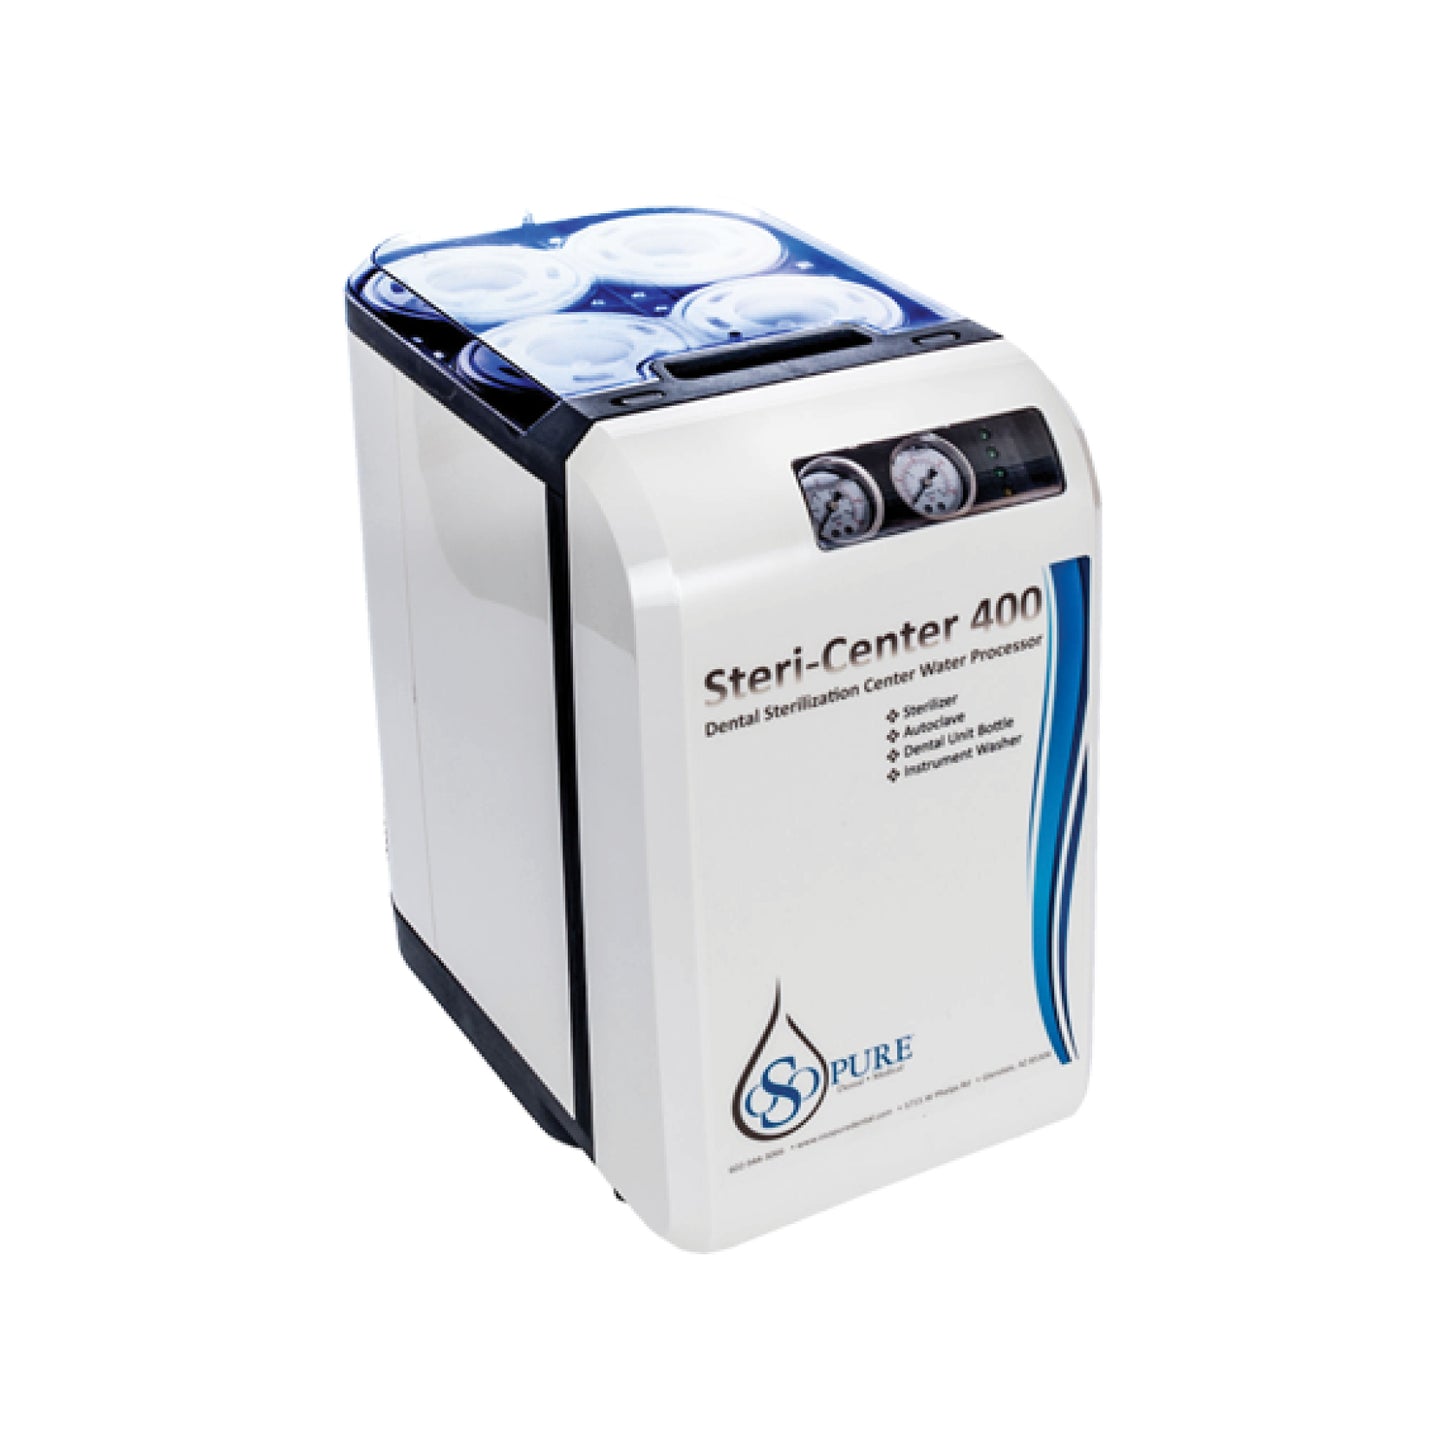 SC-400 Dental Sterilization Center Water Process